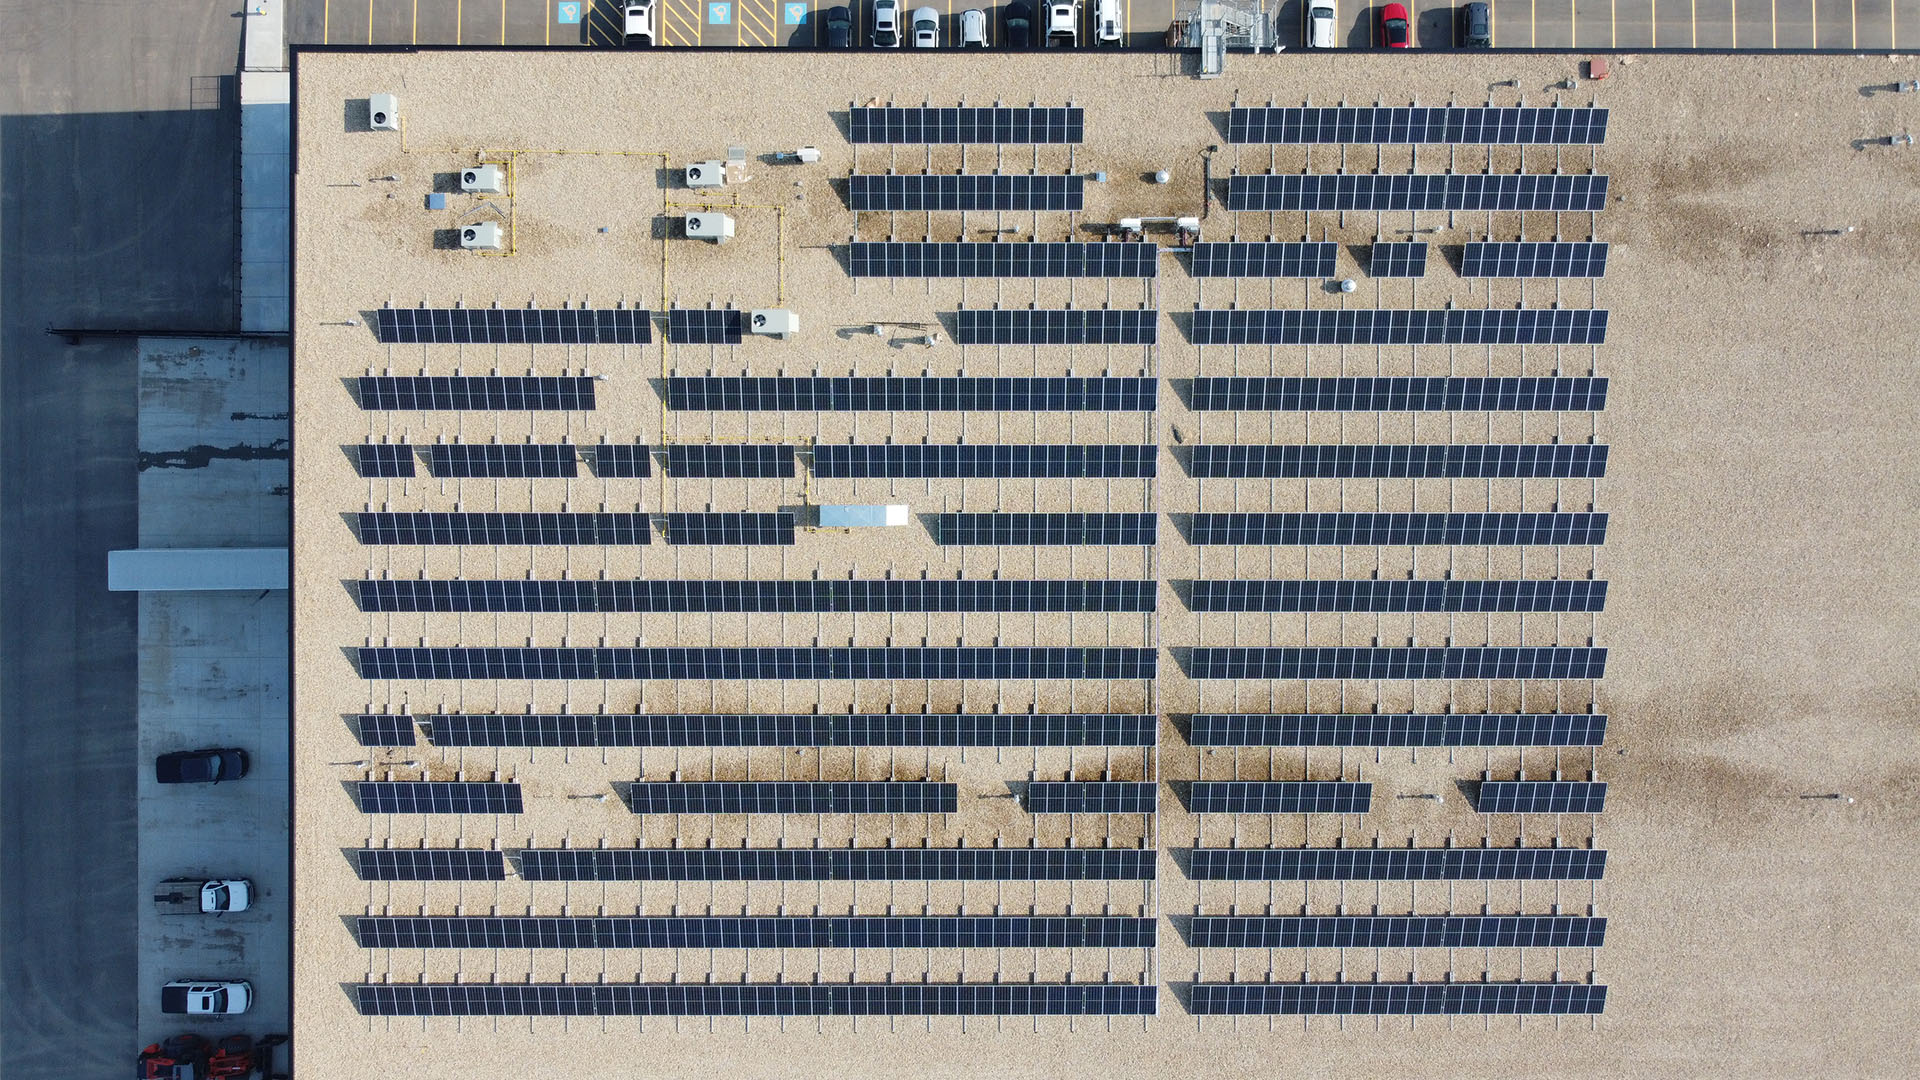 Roof top solar array on swift oilfield building